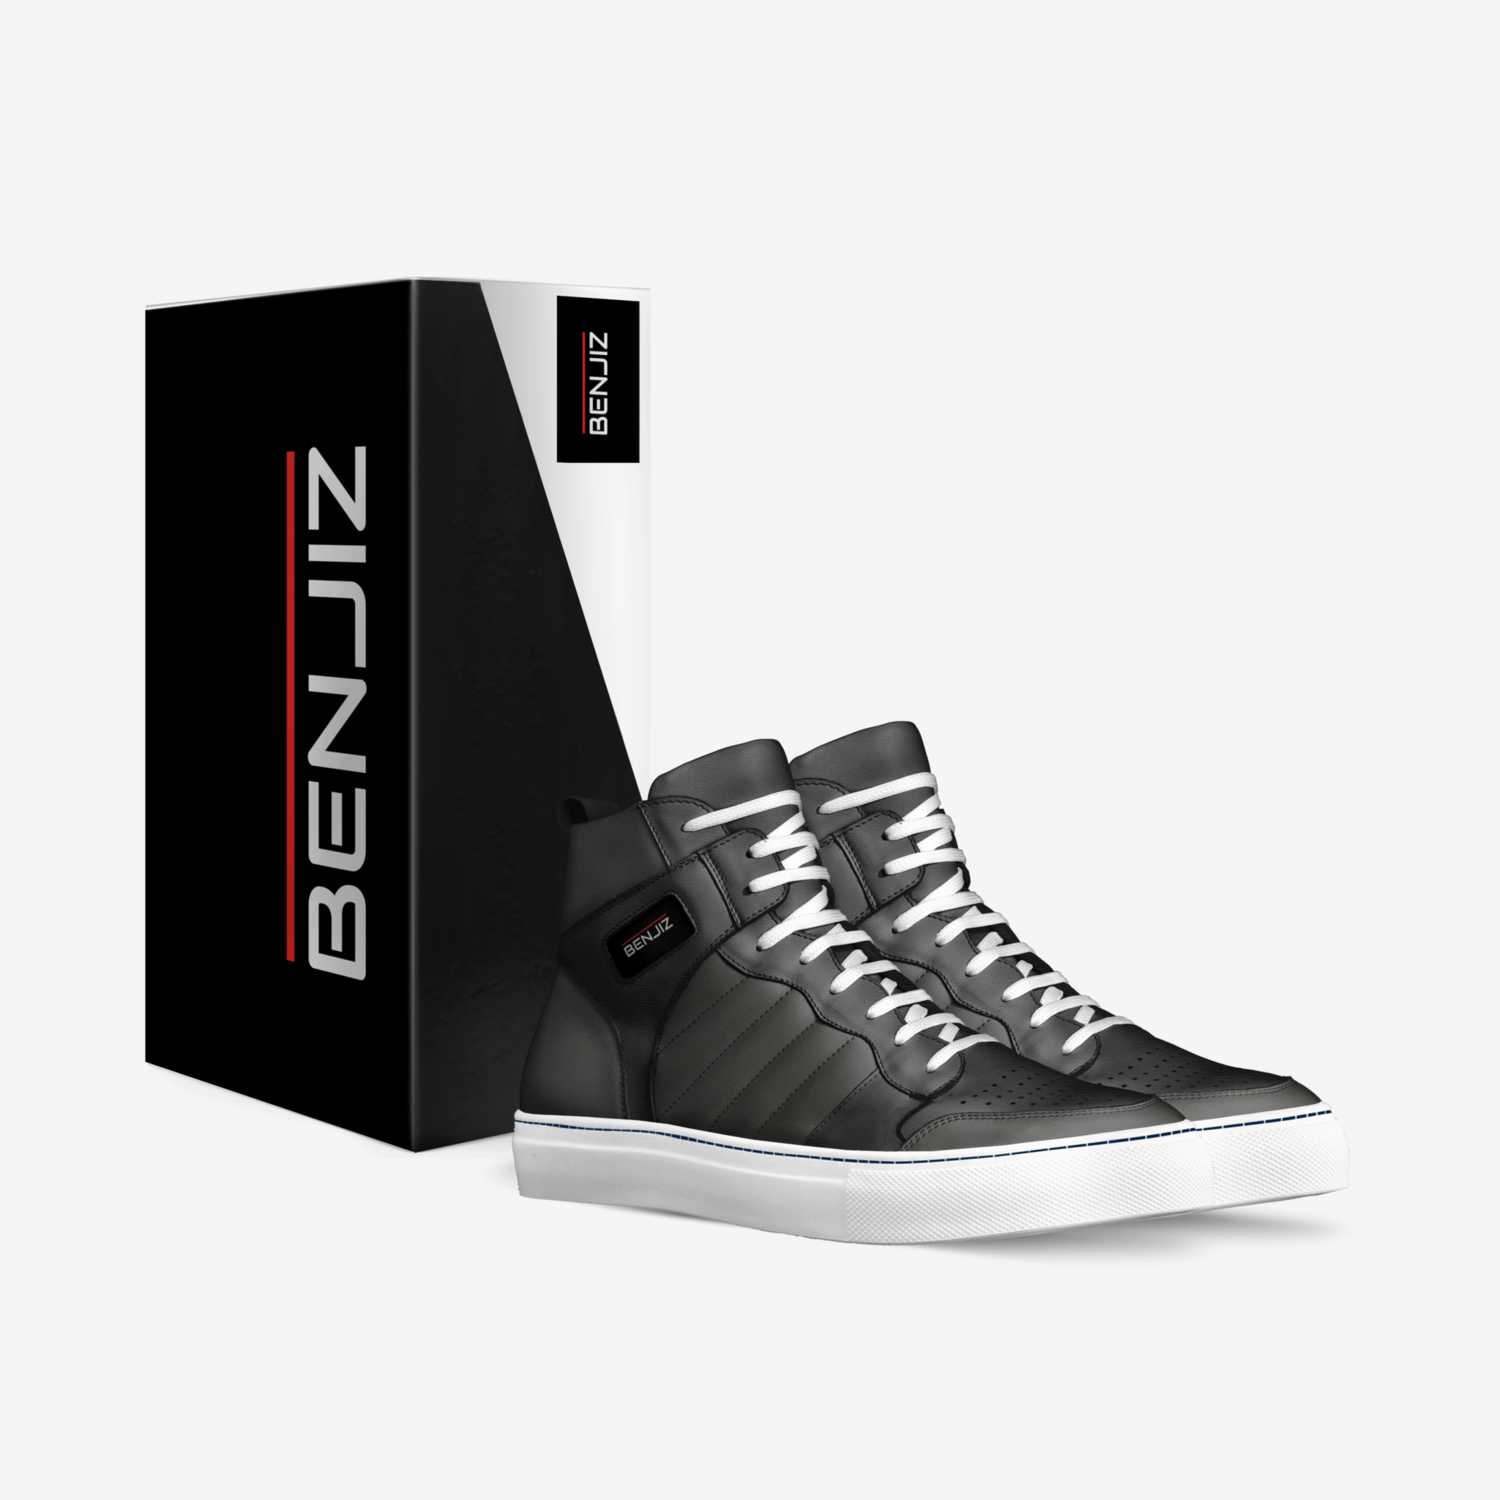 BENJIZ custom made in Italy shoes by Elena Sulja | Box view